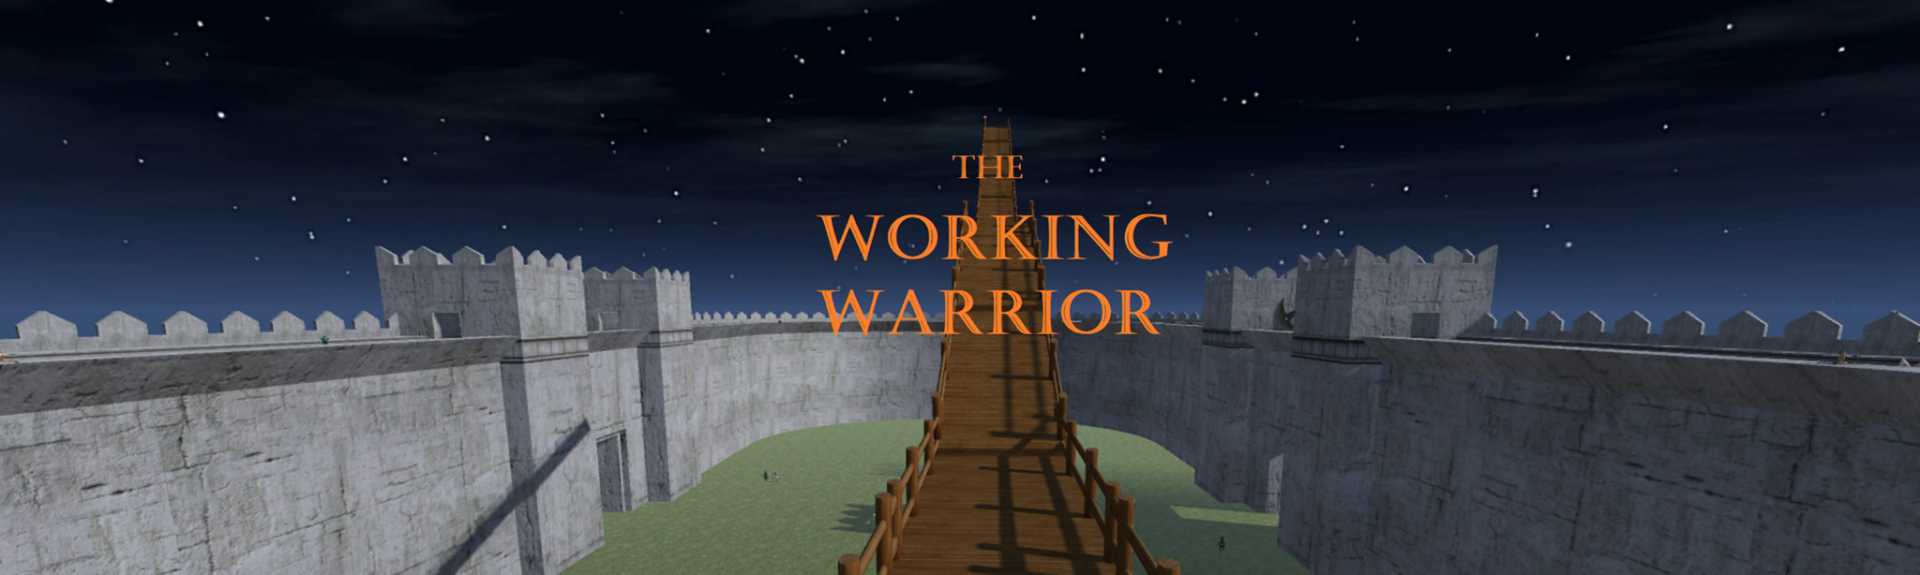 The Working Warrior